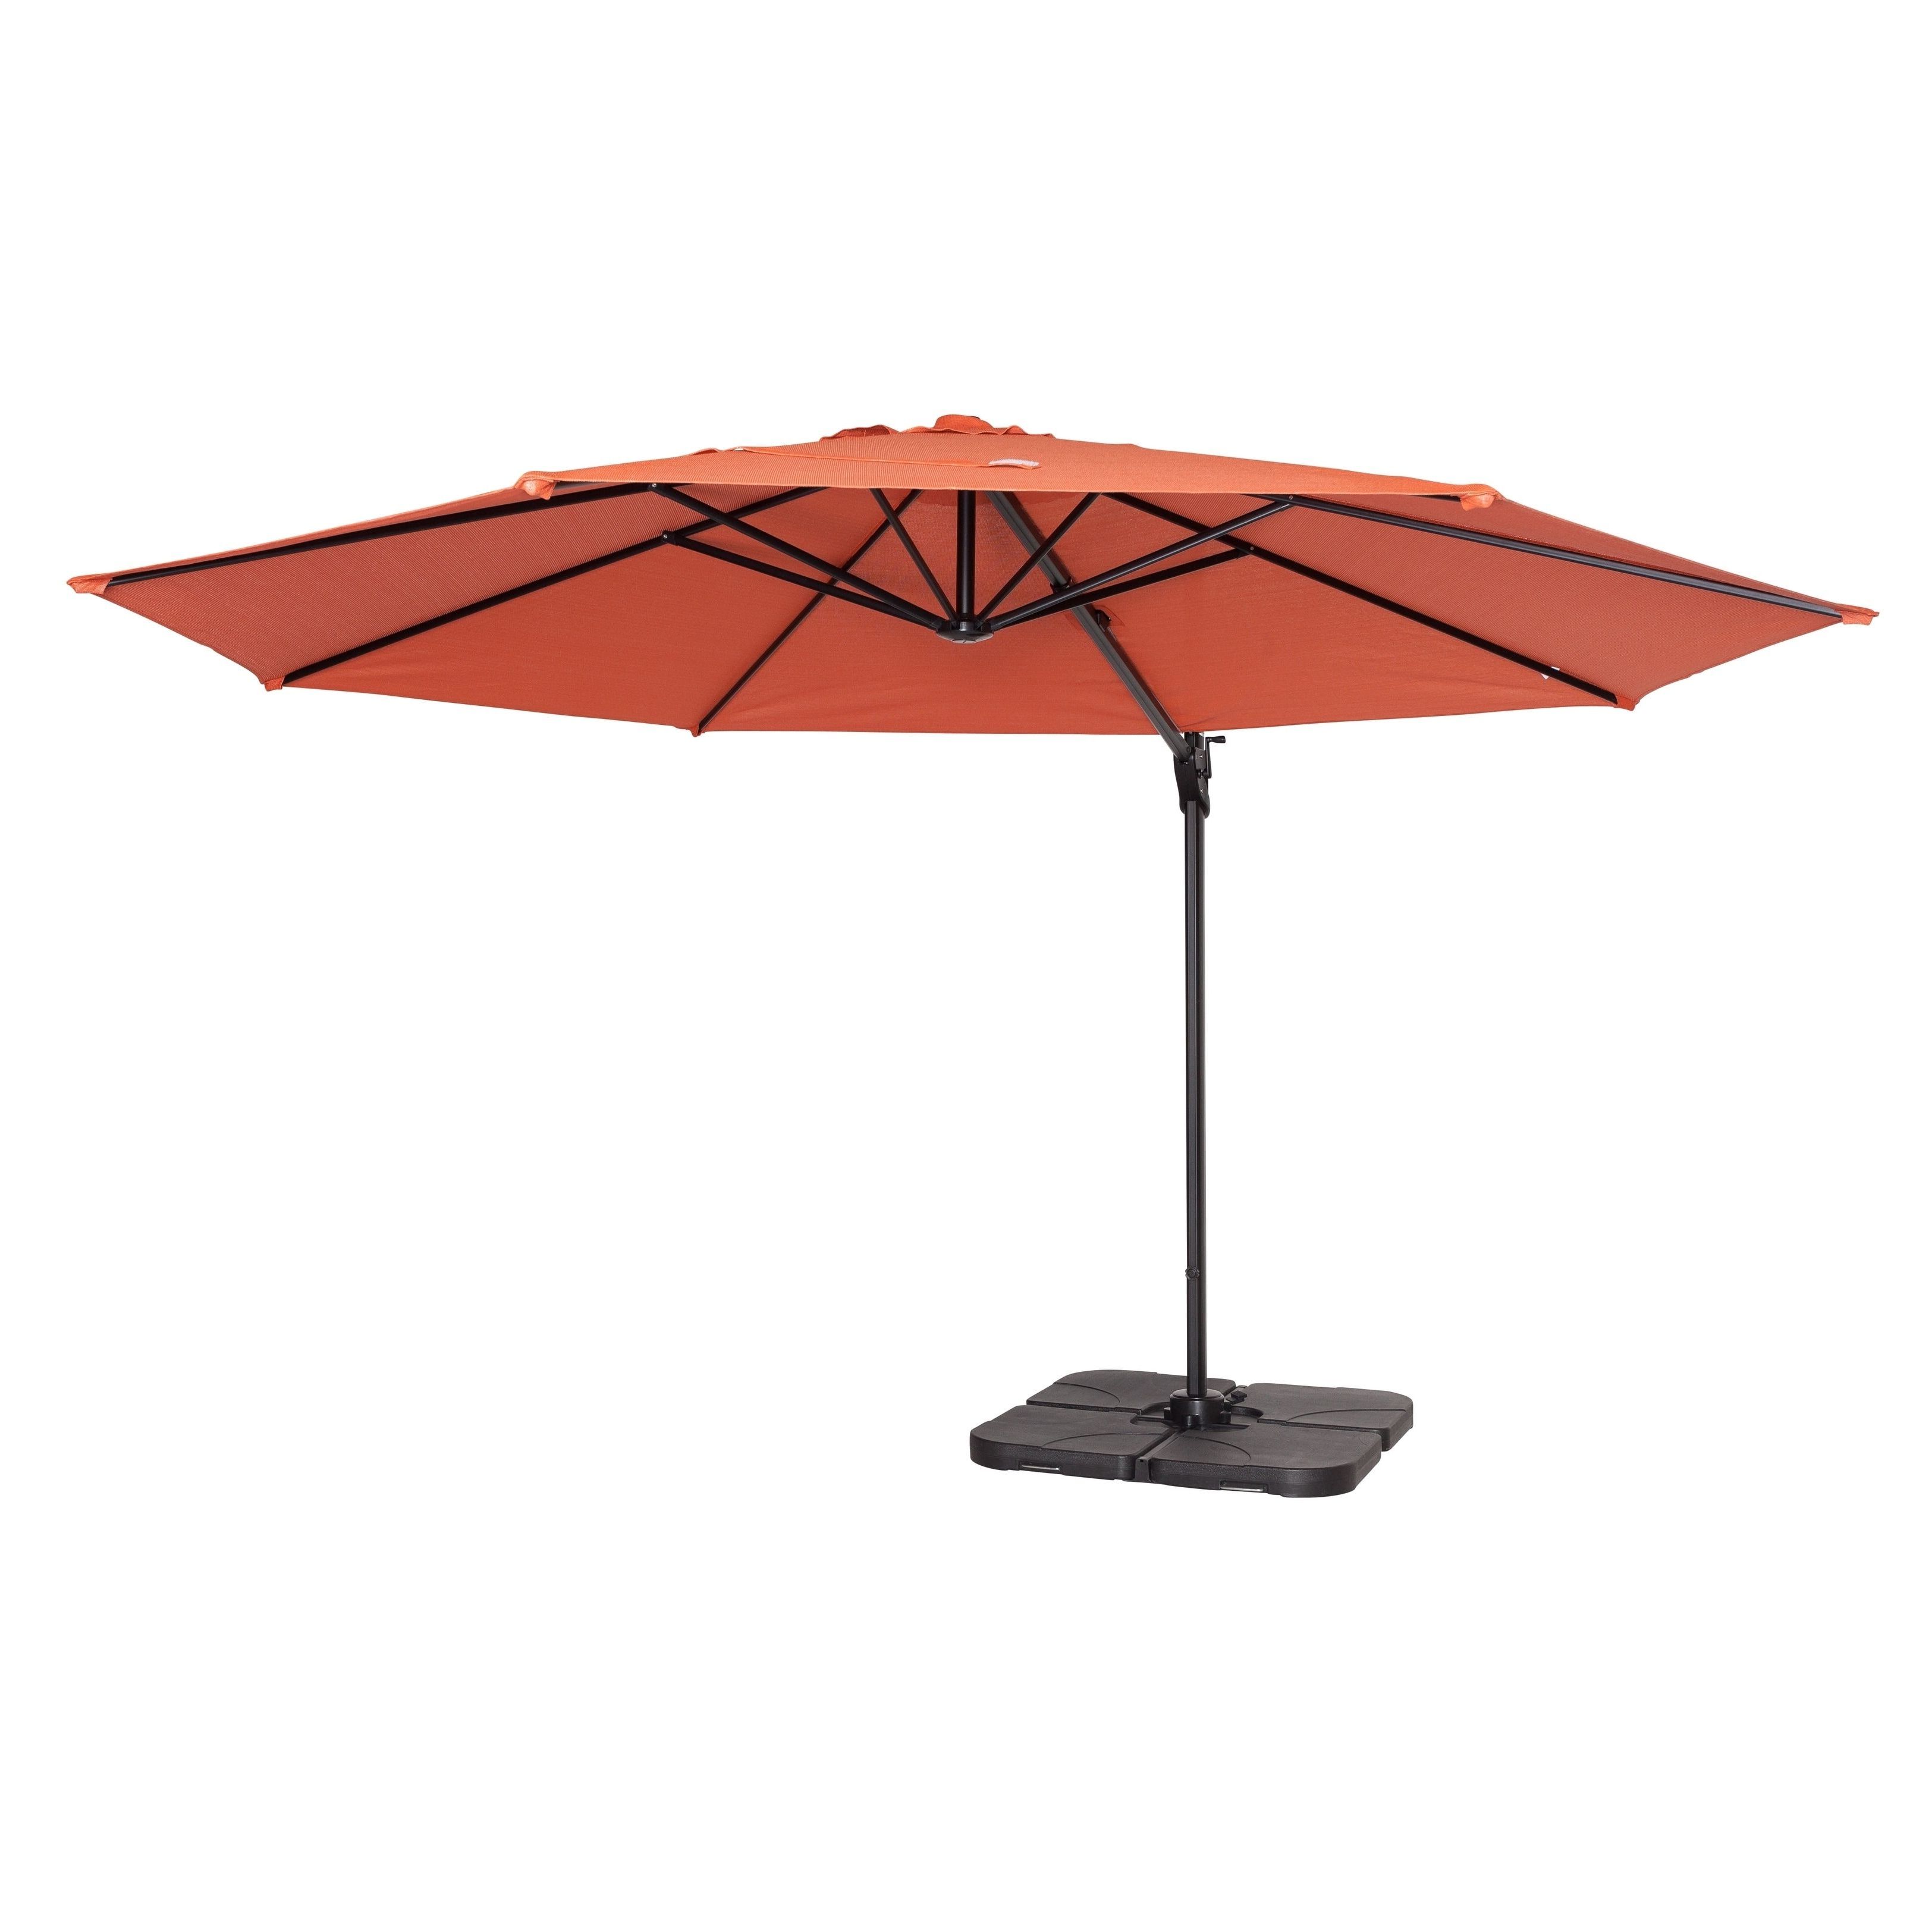 Dream Home Regarding Coolaroo Cantilever Umbrellas (View 6 of 20)